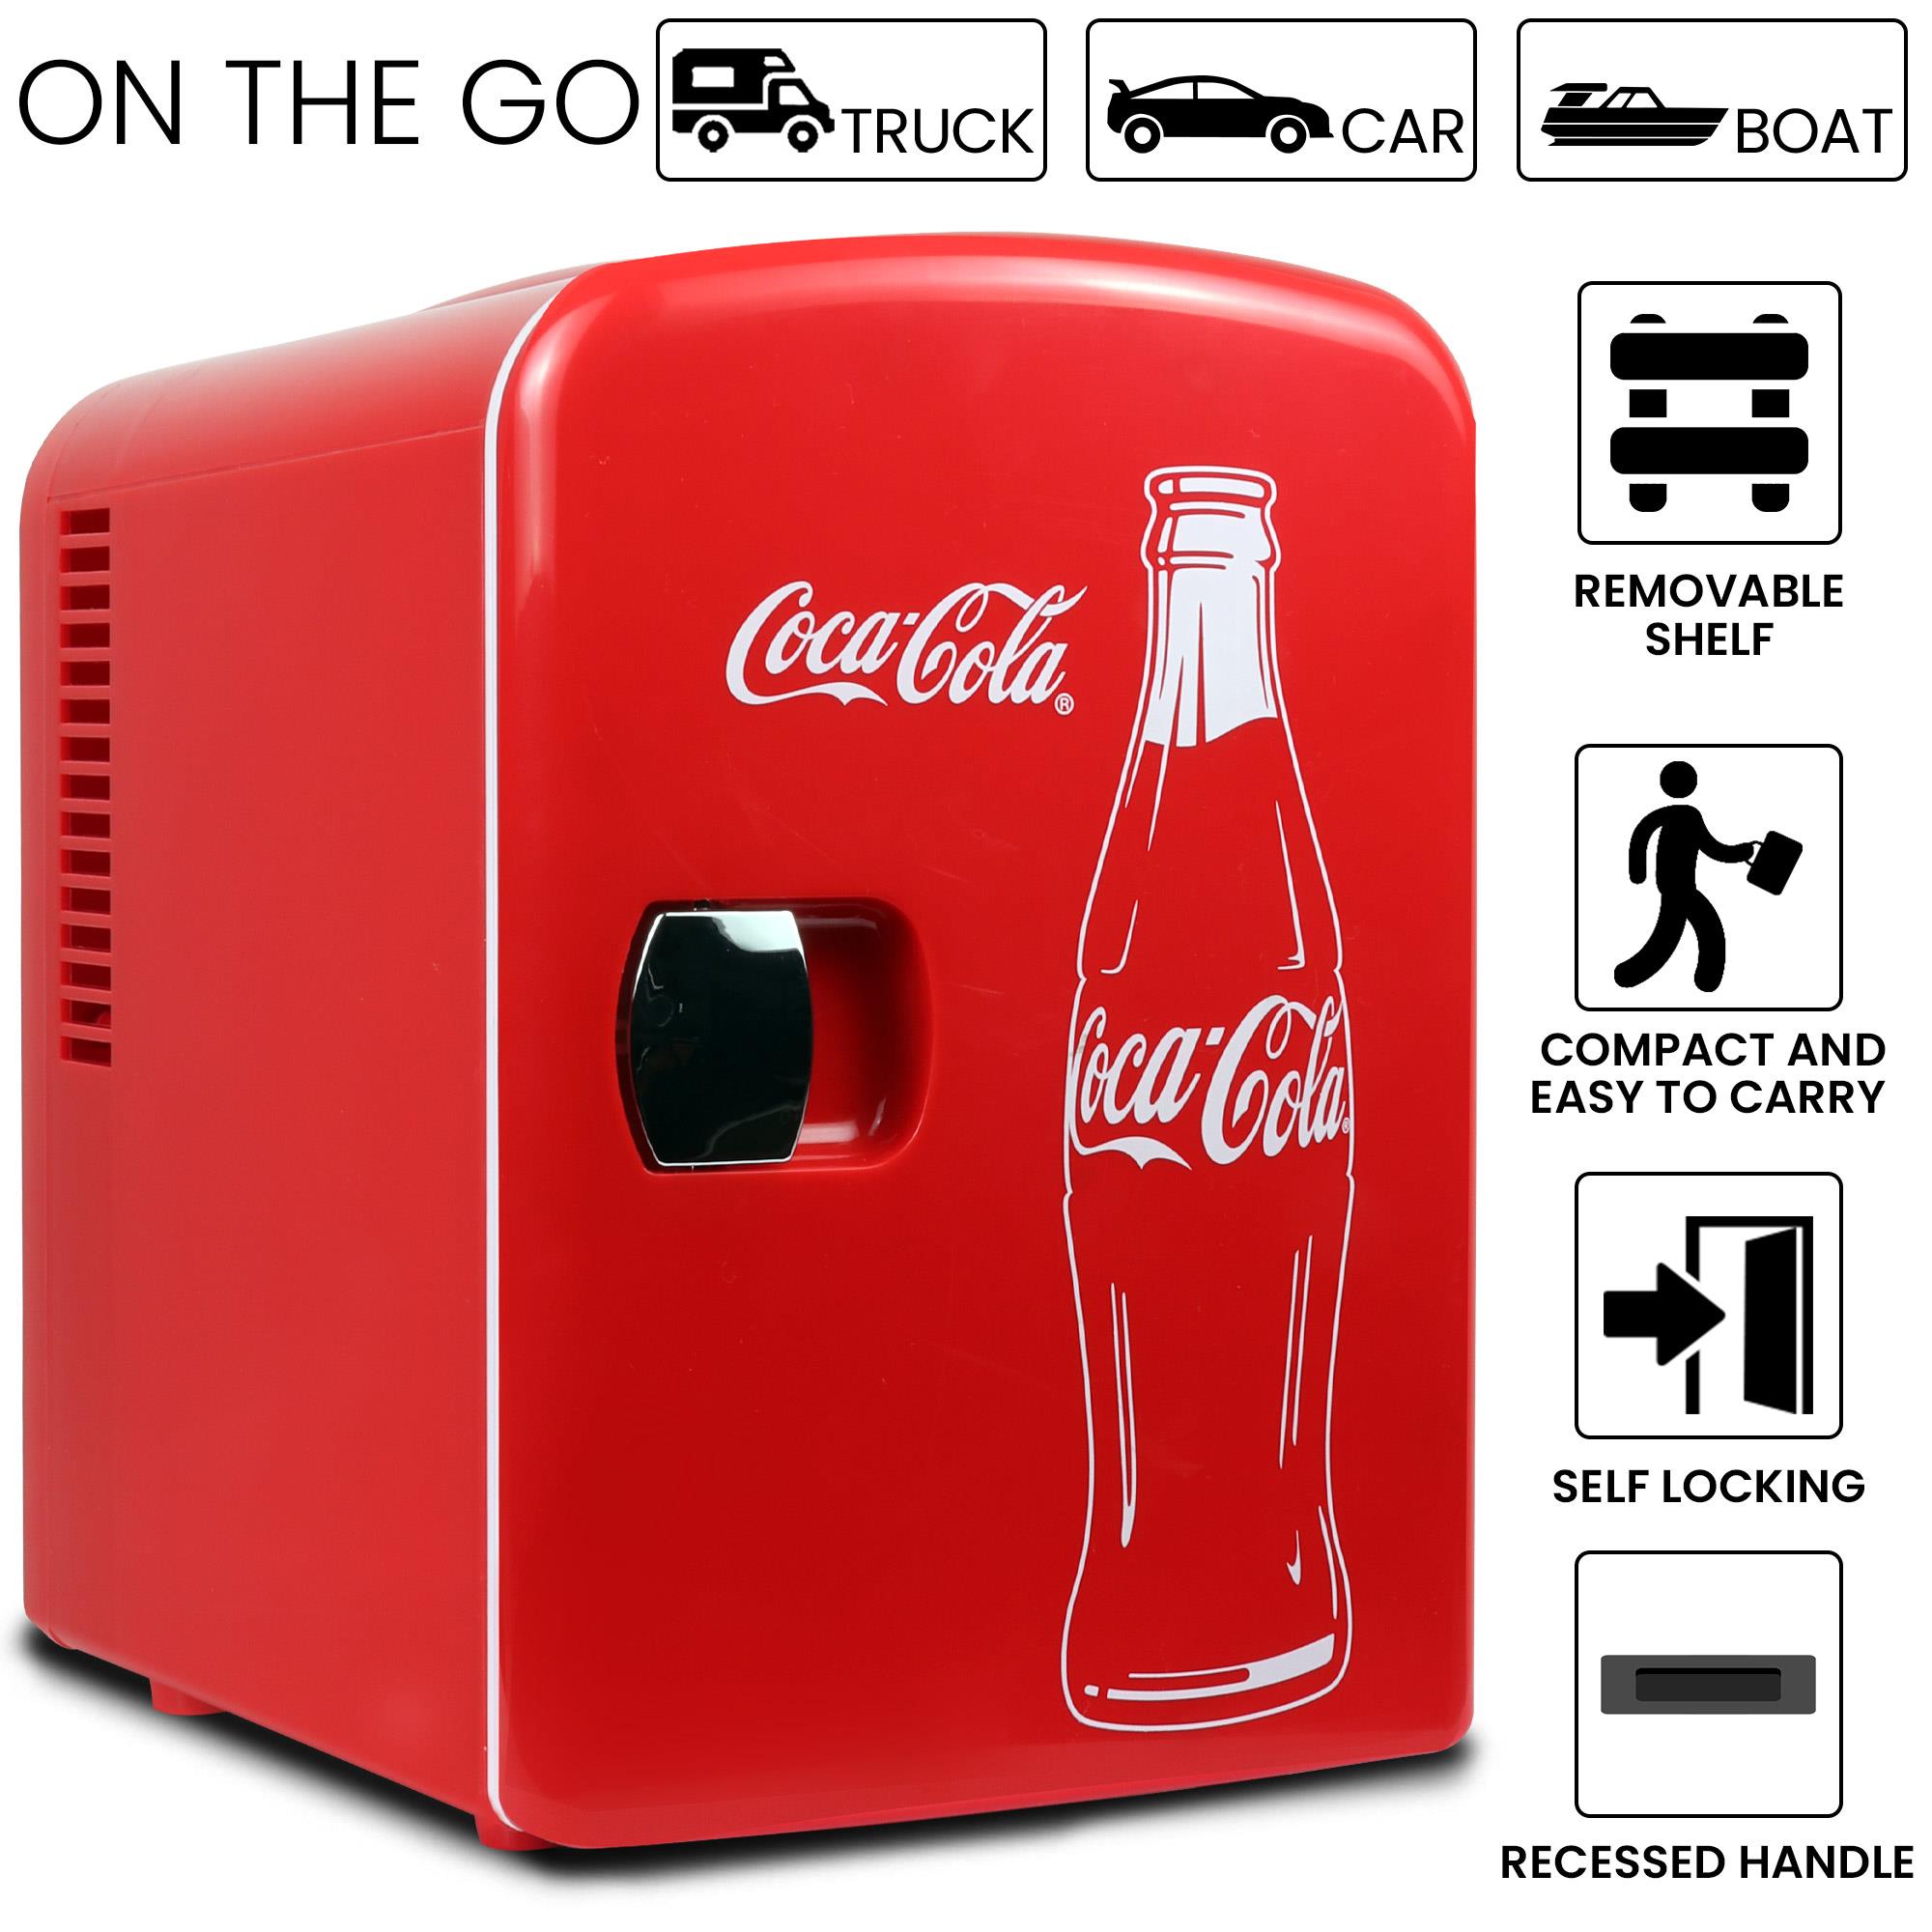 Coca-Cola Classic 0.14-cu ft Counter-depth Freestanding Mini Fridge, $24.99